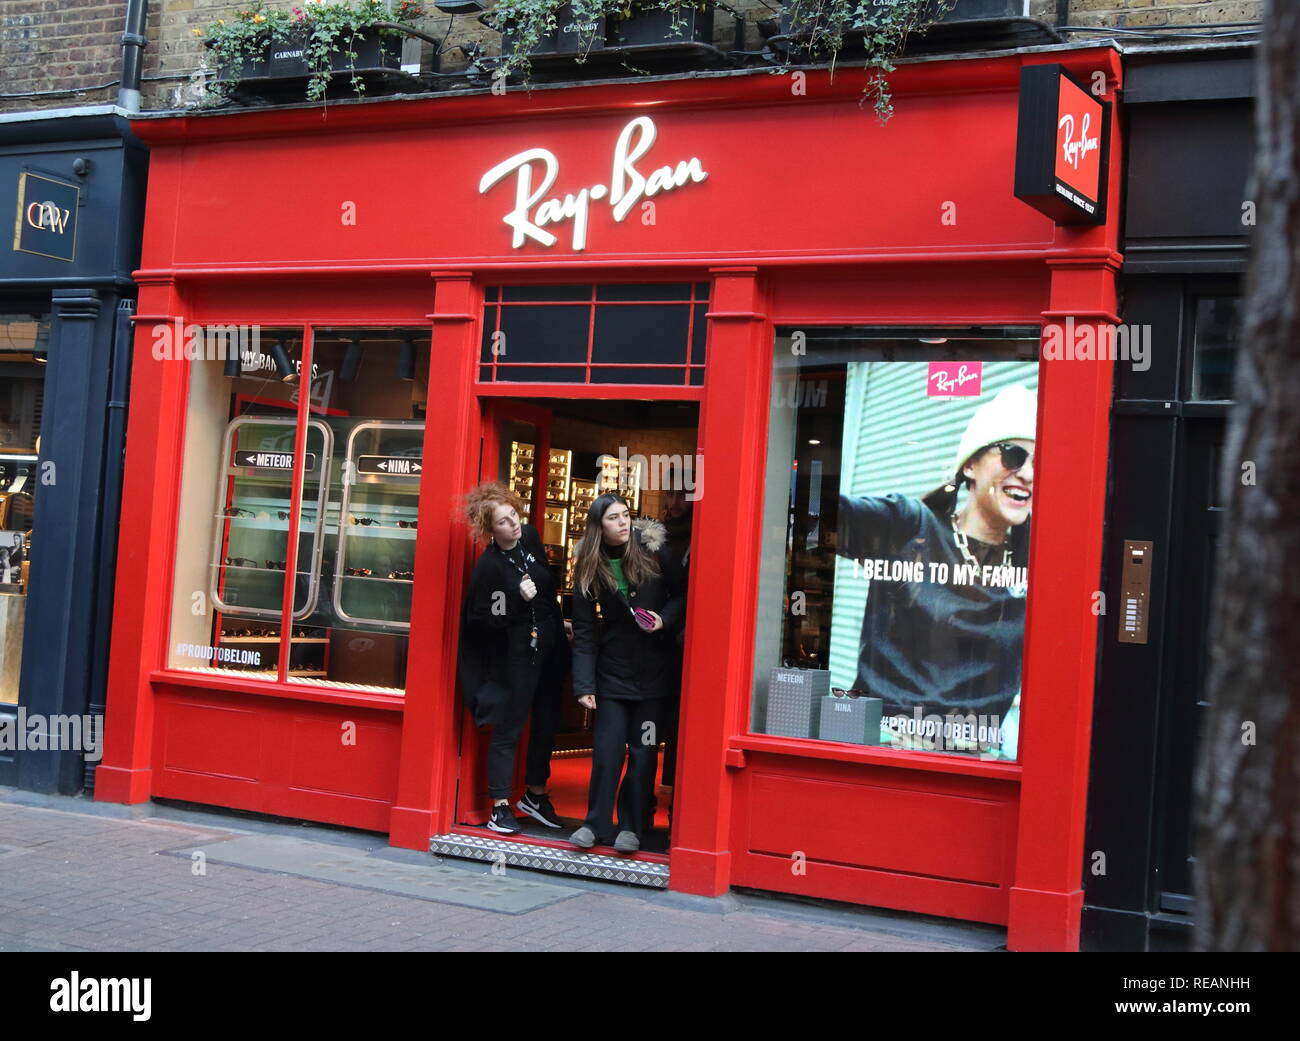 Ray-Ban brand logo seen in Carnaby Street in London, UK Stock Photo - Alamy